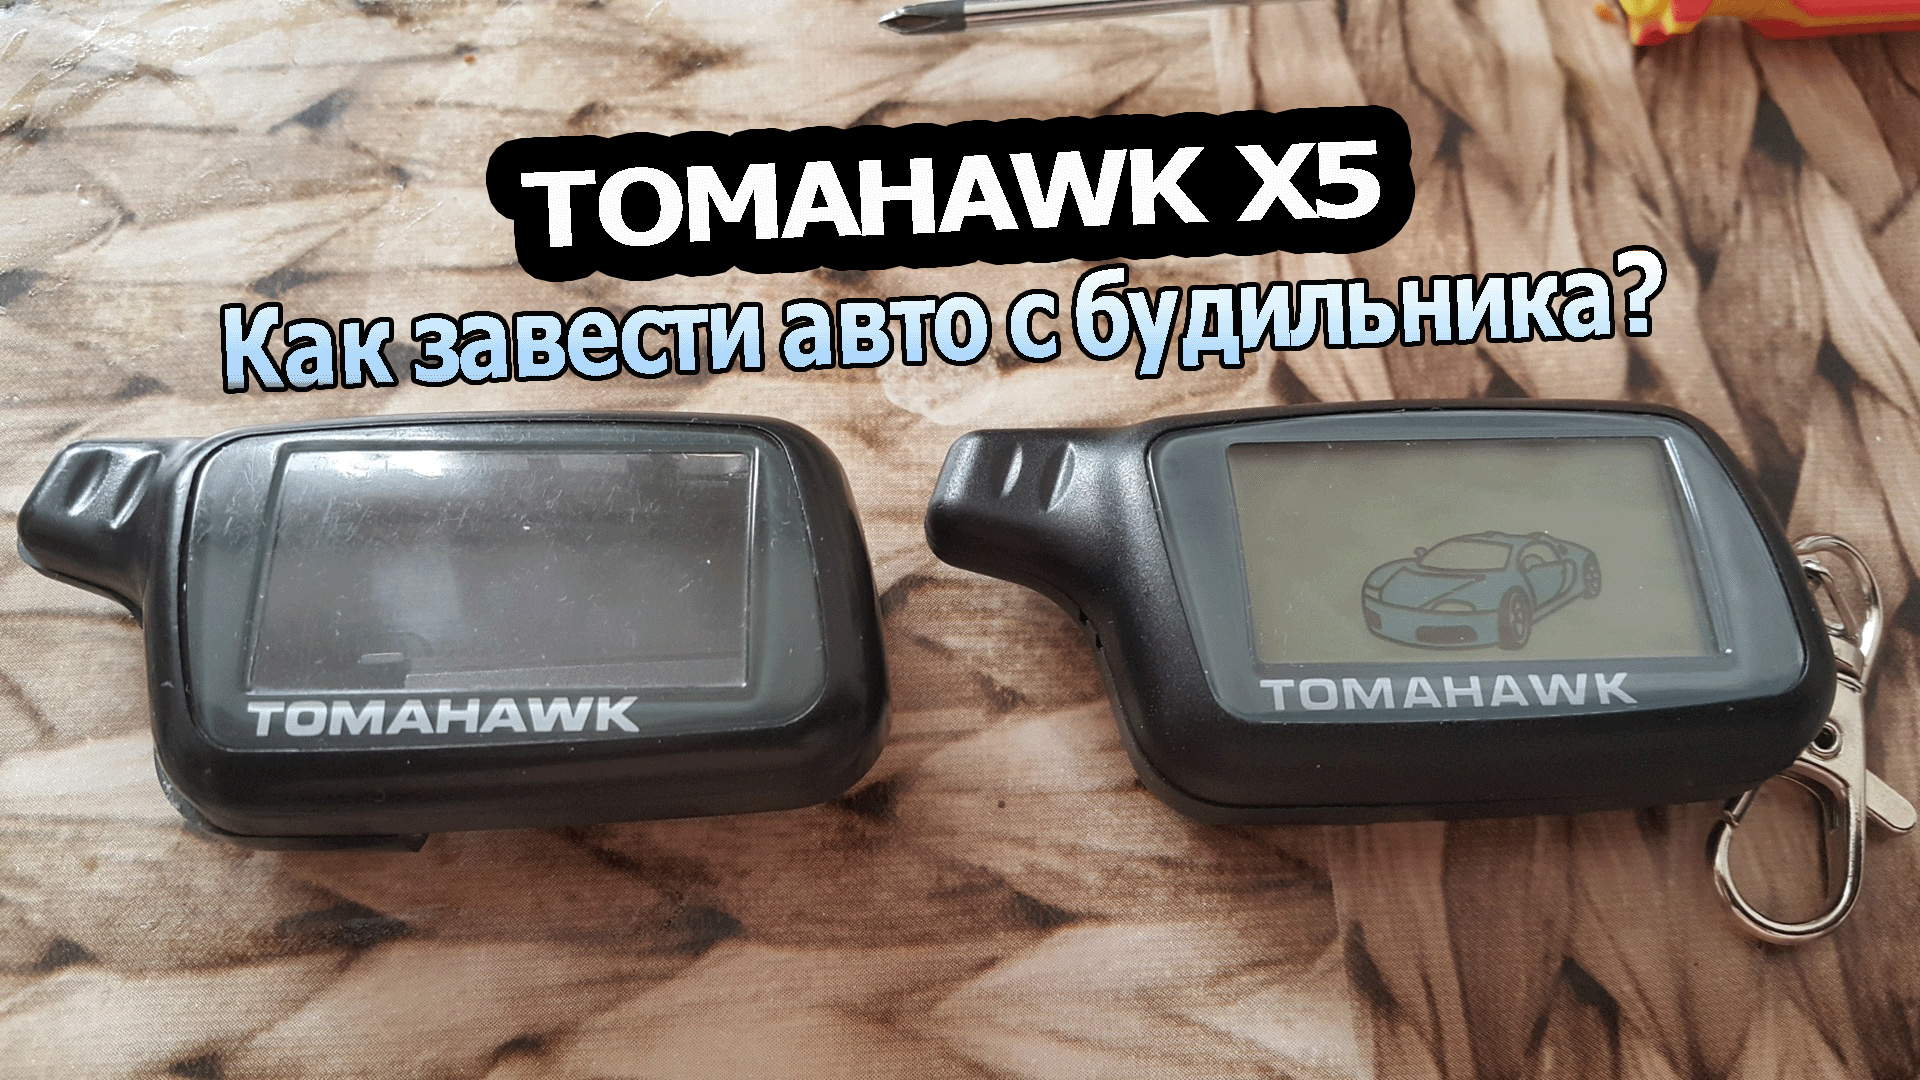 Сигнализация Tomahawk x5 с запуском